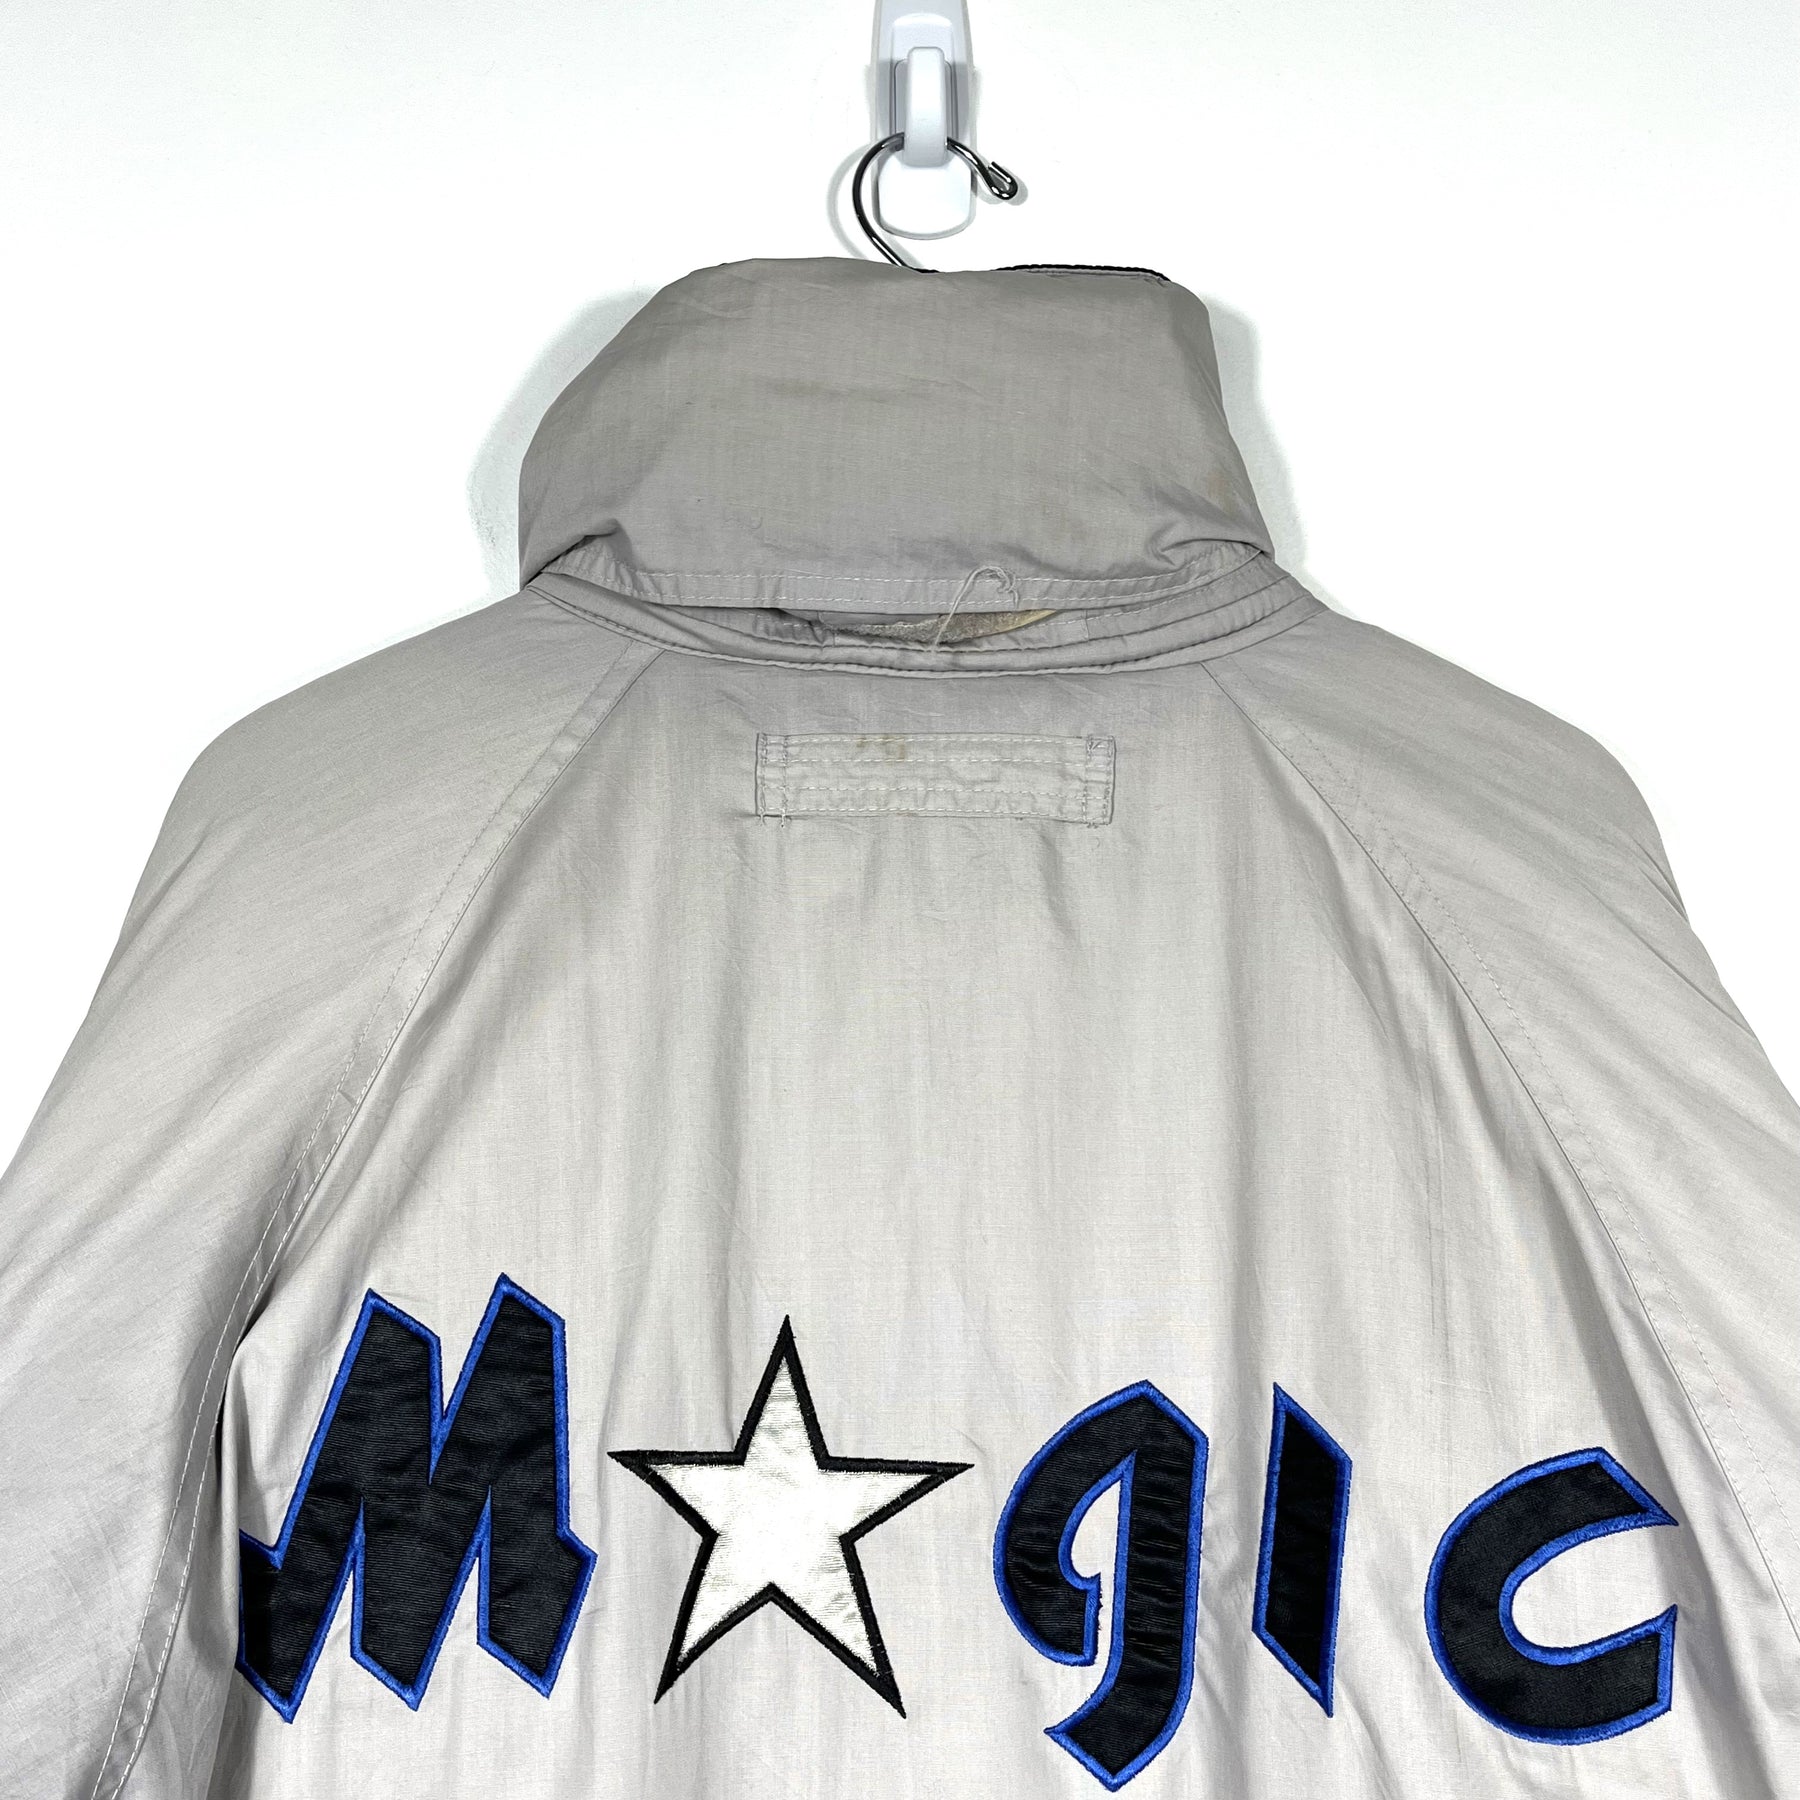 Vintage NBA Reversible Orlando Magic Insulated Jacket  - Men's XL